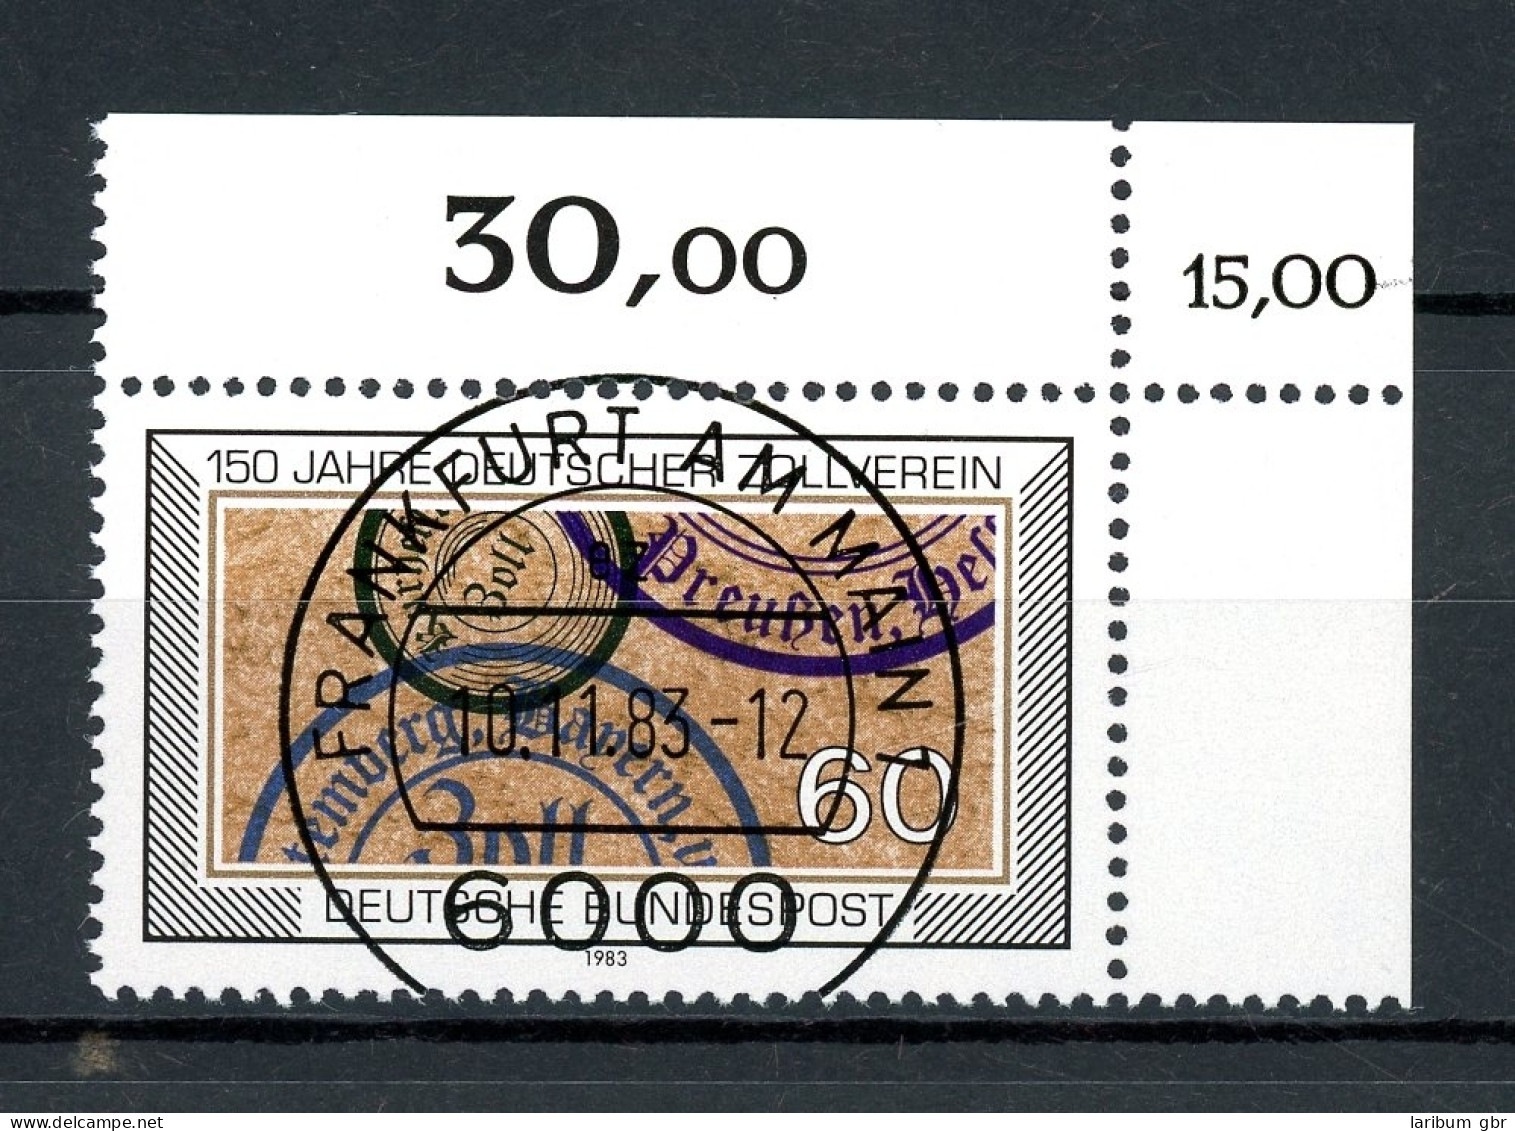 Bund 1195 KBWZ Gestempelt Frankfurt #IV033 - Used Stamps